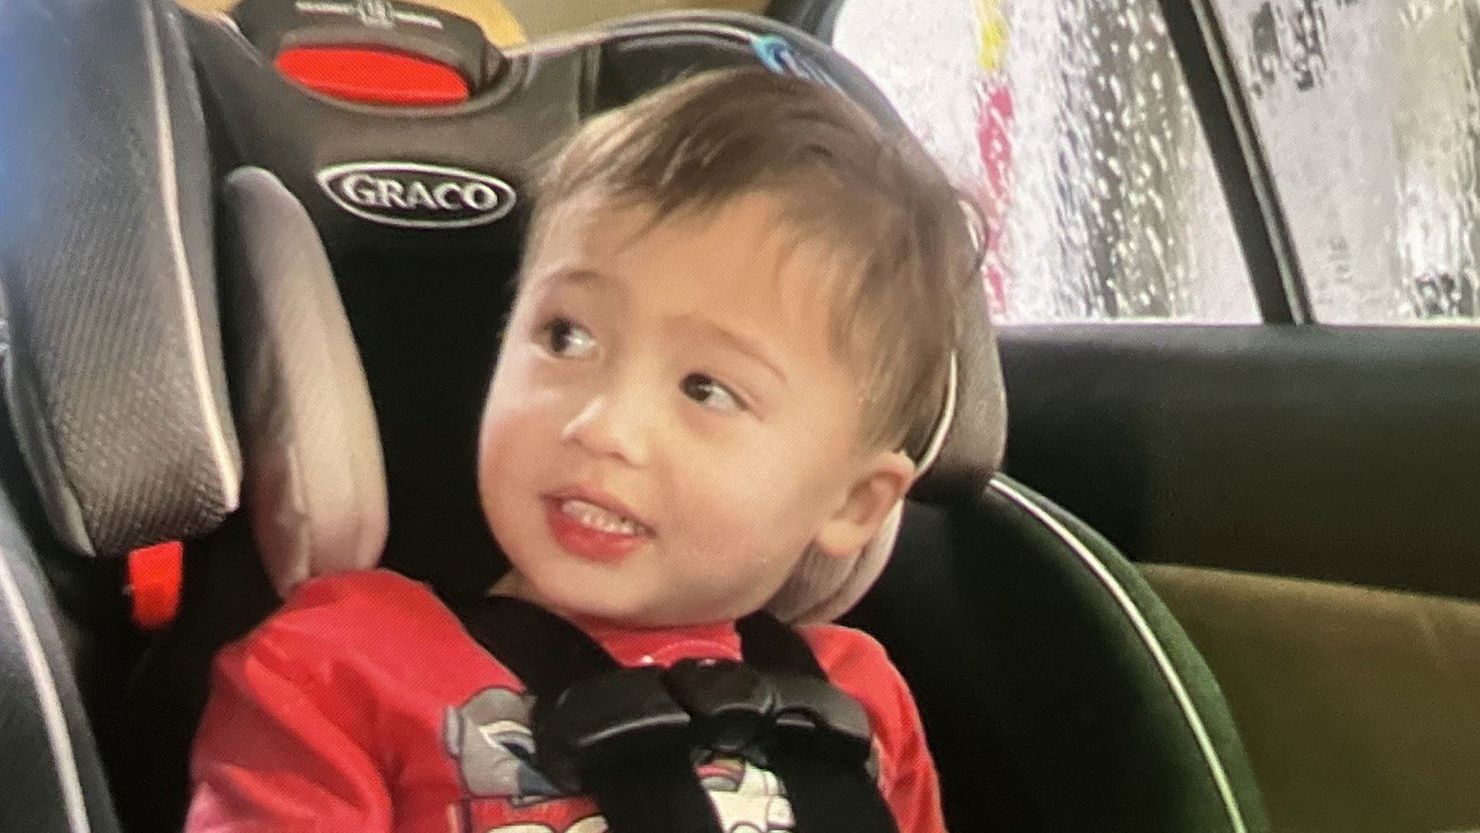 Elijah Vue, 3, has been missing since February 20.